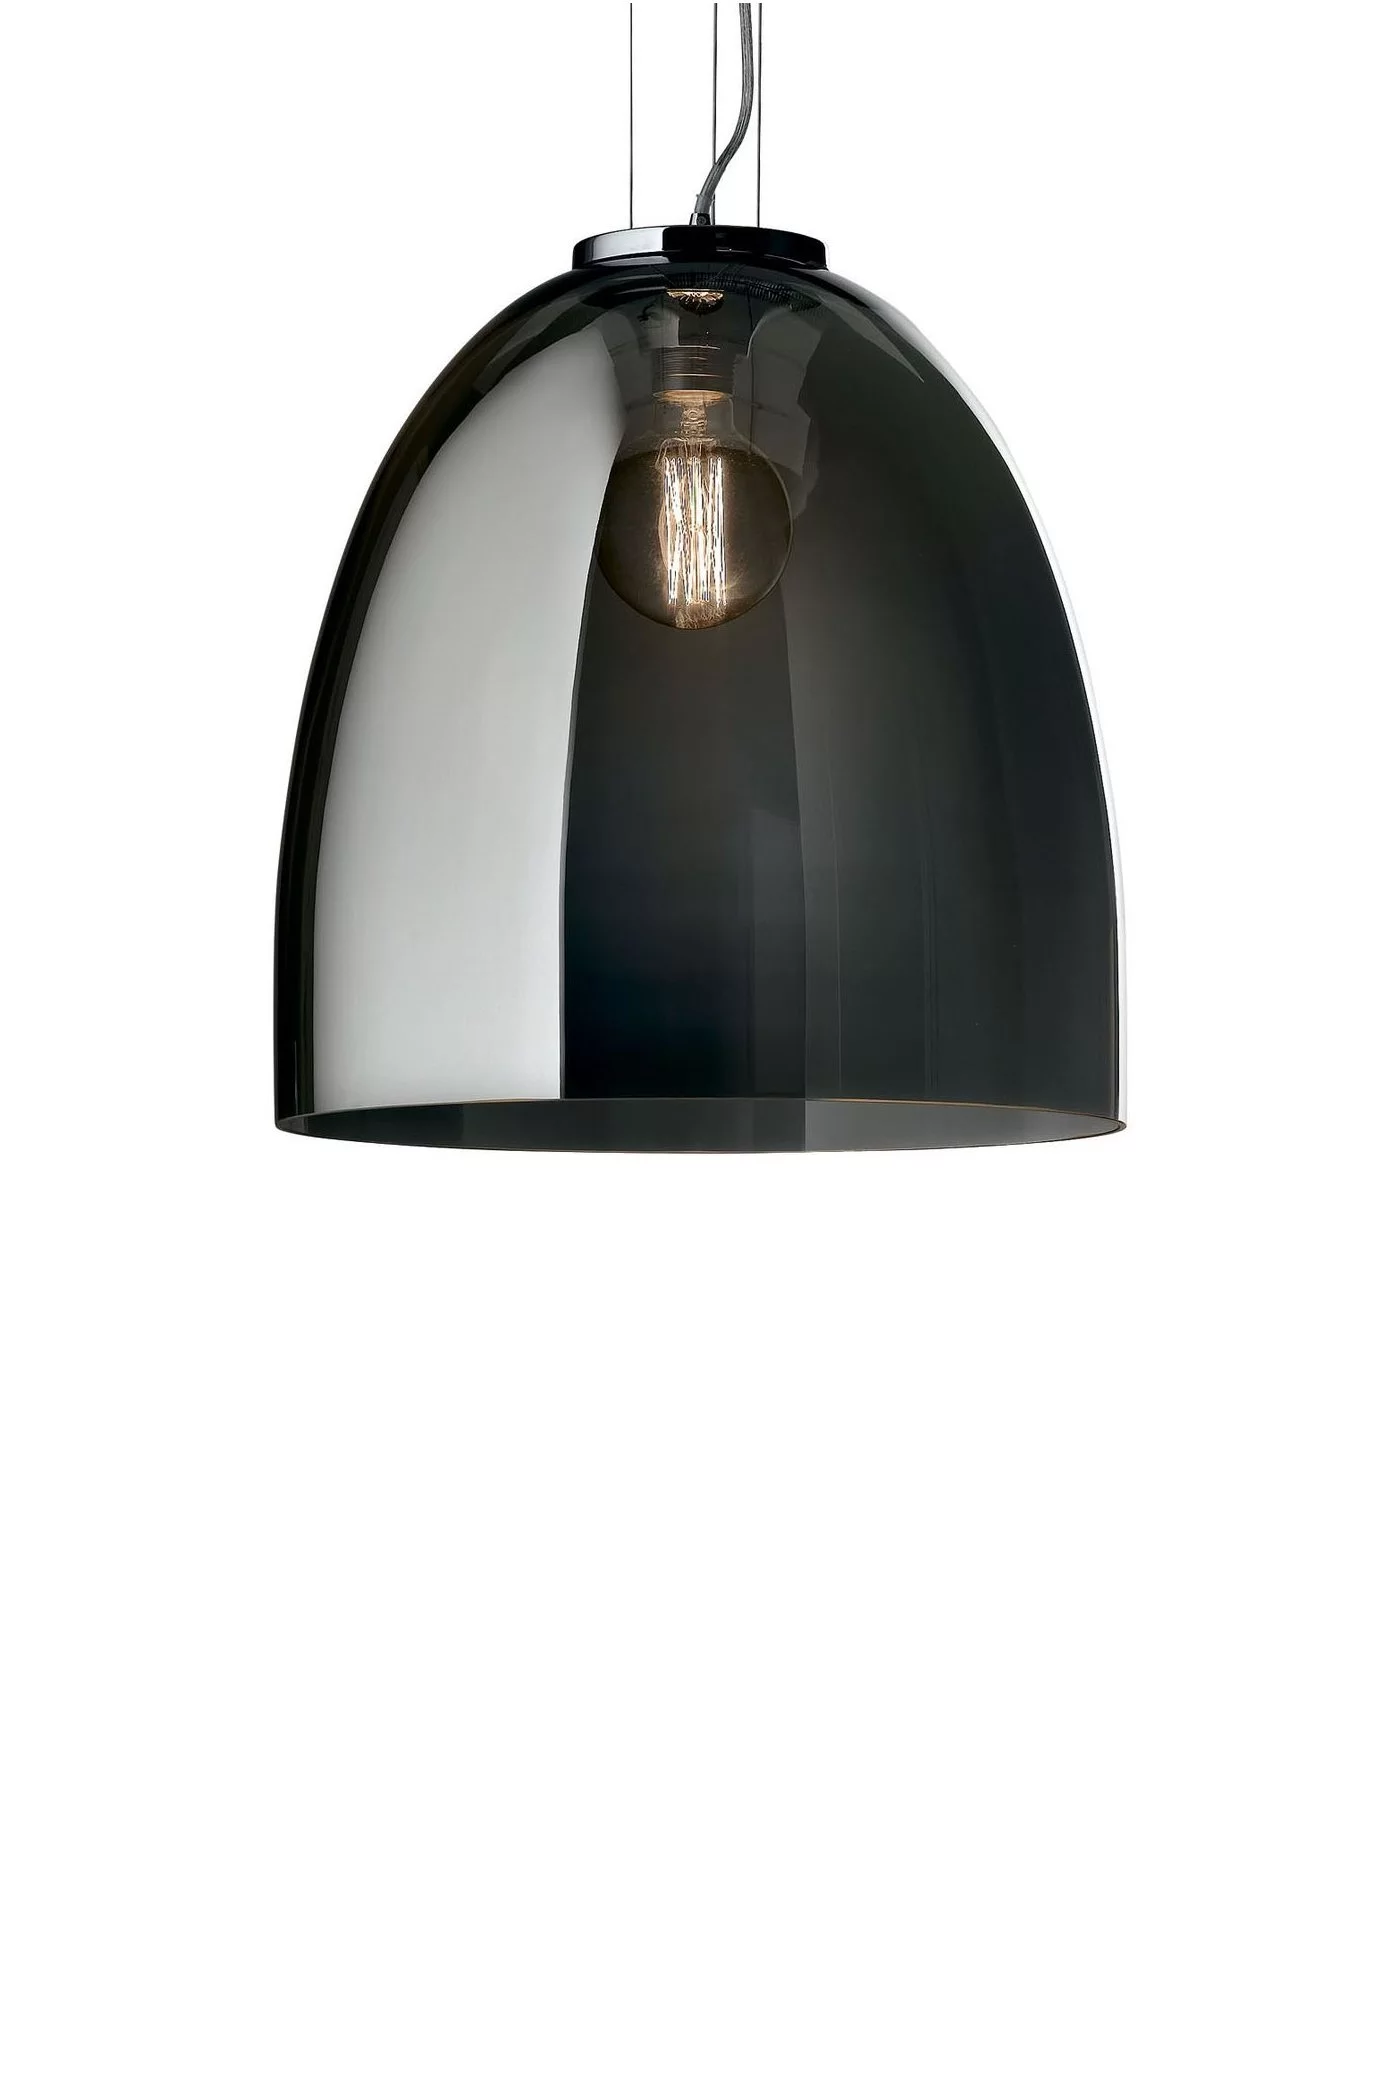   
                        Люстра IDEAL LUX  (Италия) 81192    
                         в стиле Модерн.  
                        Тип источника света: светодиодная лампа, сменная.                         Форма: Круг.                         Цвета плафонов и подвесок: Серый.                         Материал: Стекло.                          фото 1